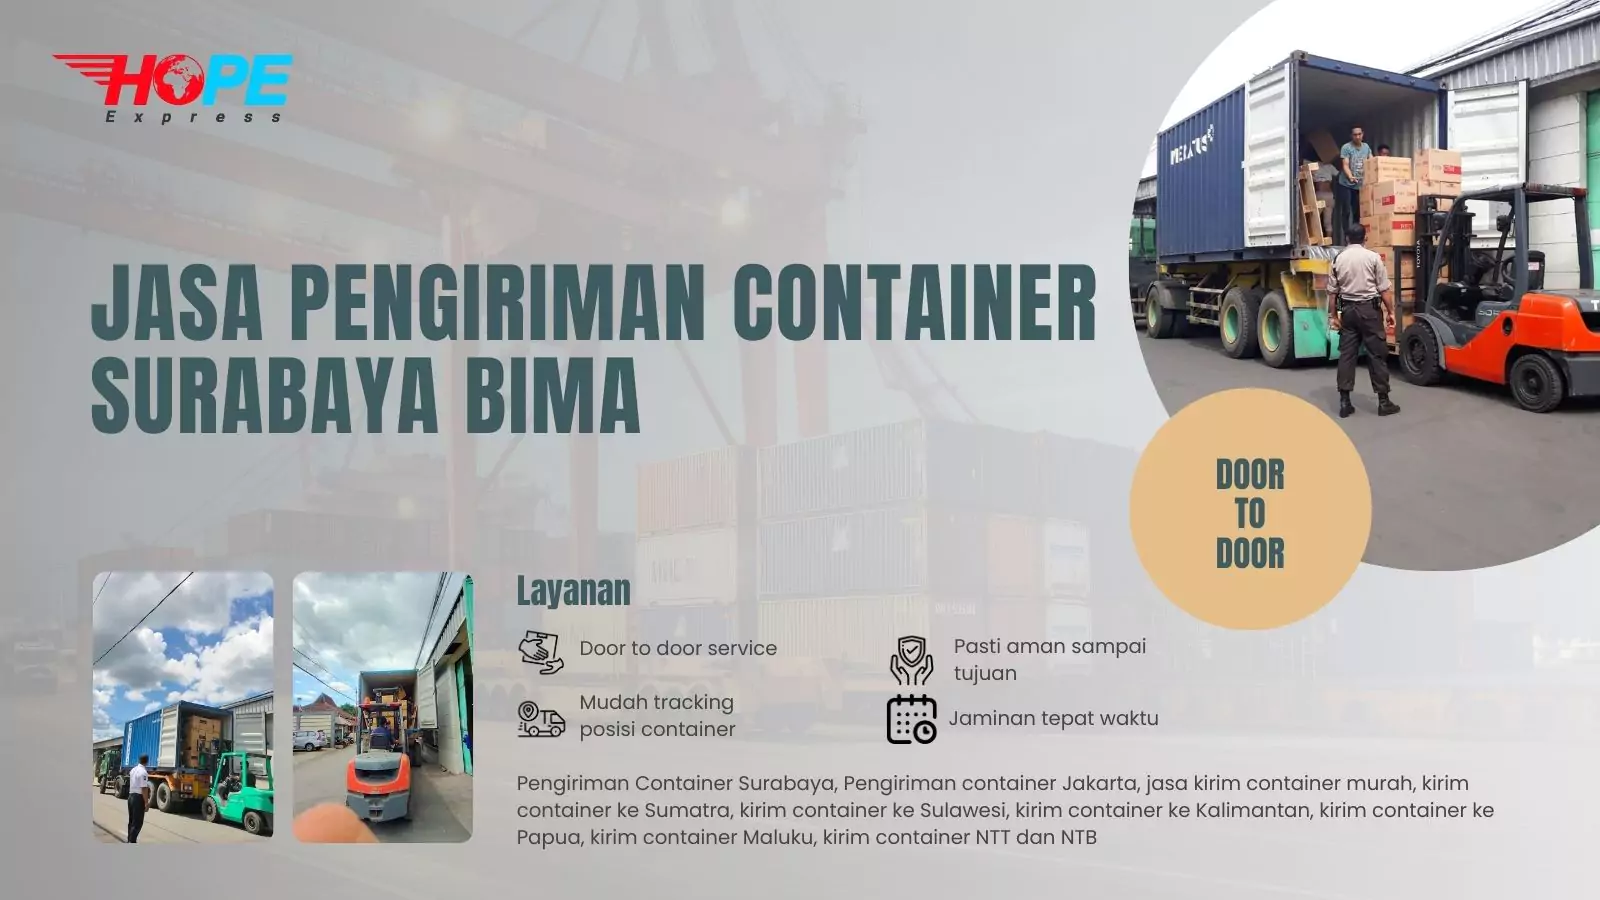 Jasa Pengiriman Container Surabaya Bima